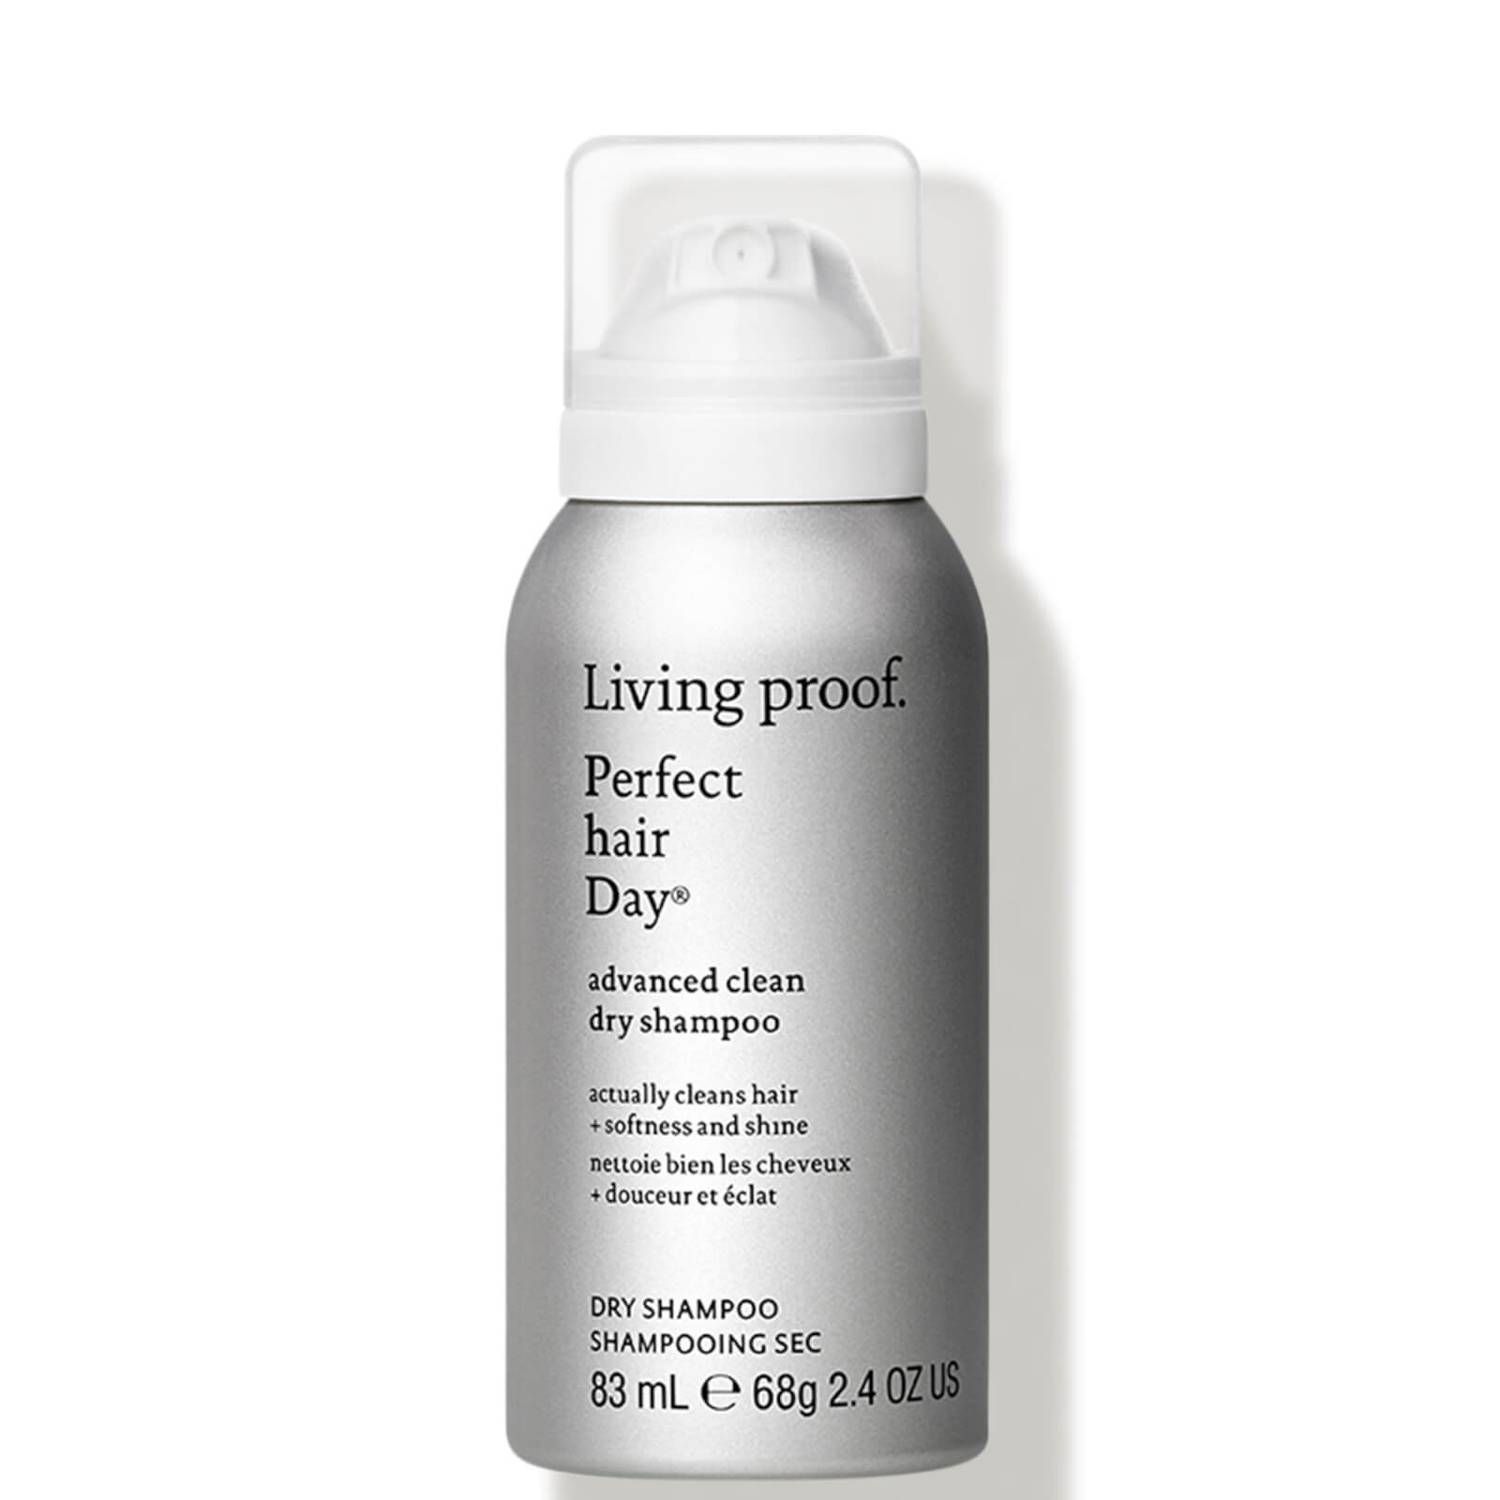 Living Proof Perfect hair Day (PhD) Advanced Clean Dry Shampoo 2.4 oz. | Dermstore (US)